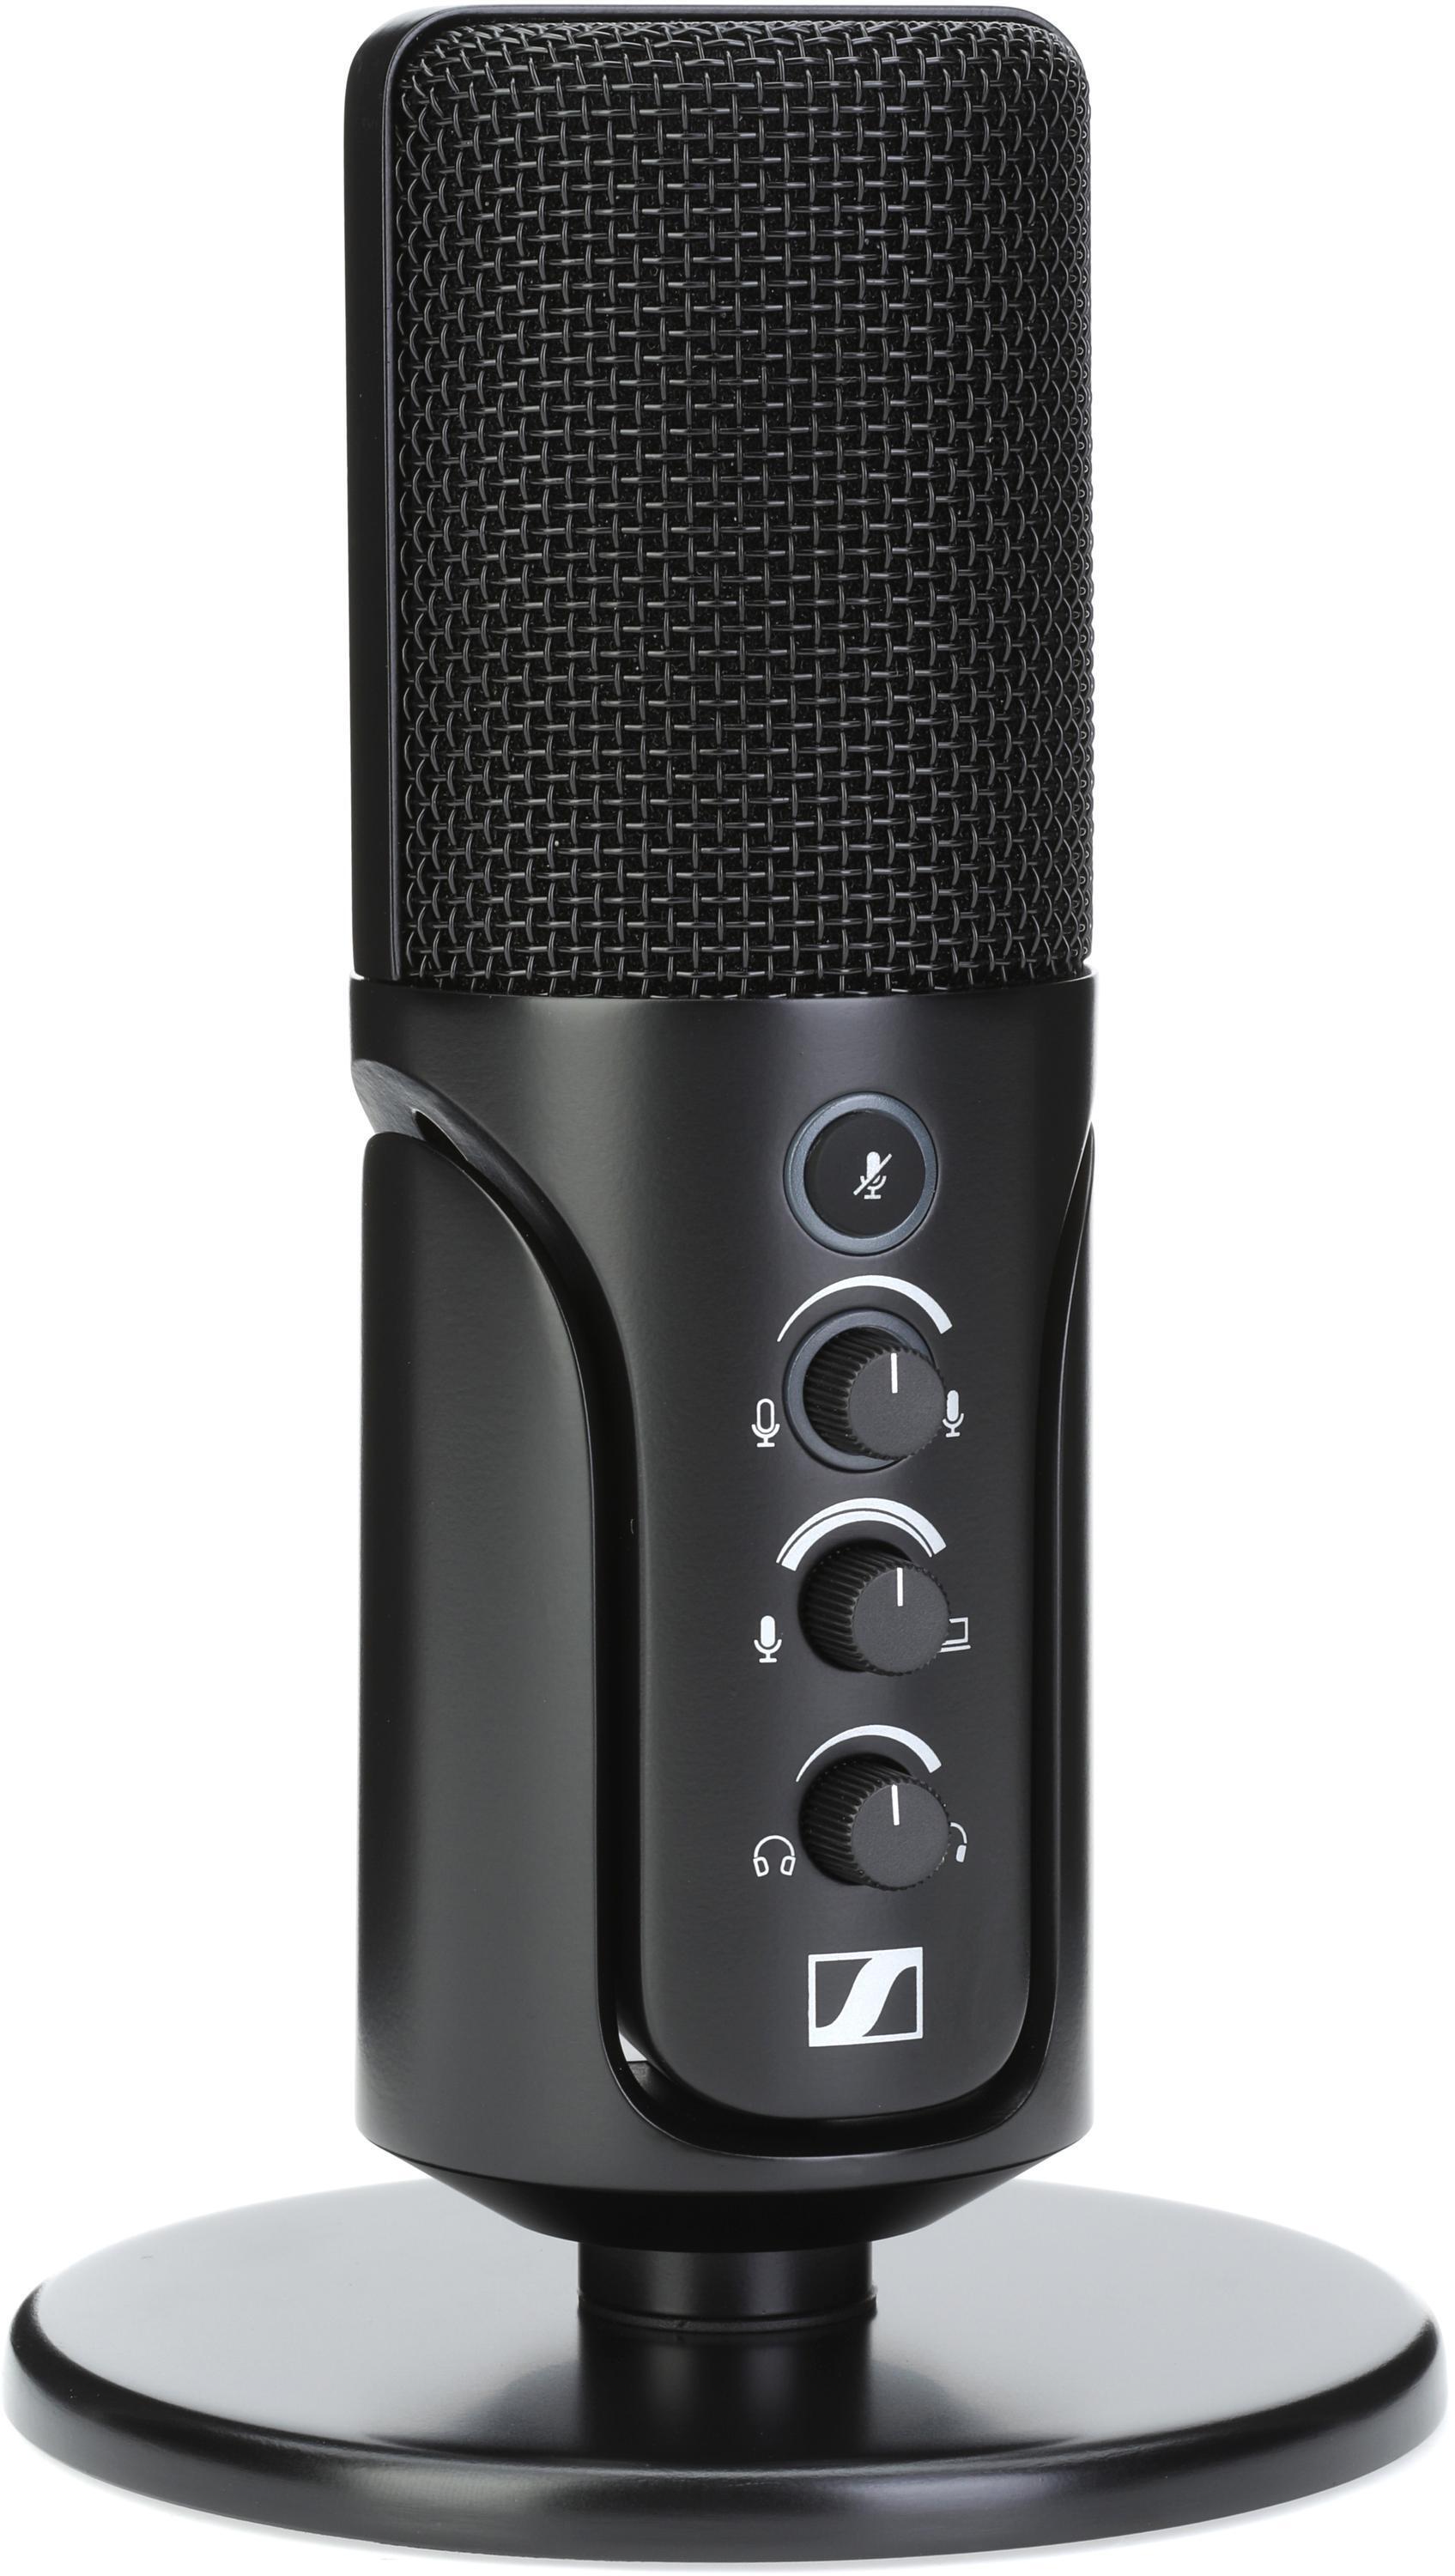 Blue Yeti Pro XLR / USB Condenser Microphone - Black / Silver Fast Shipping